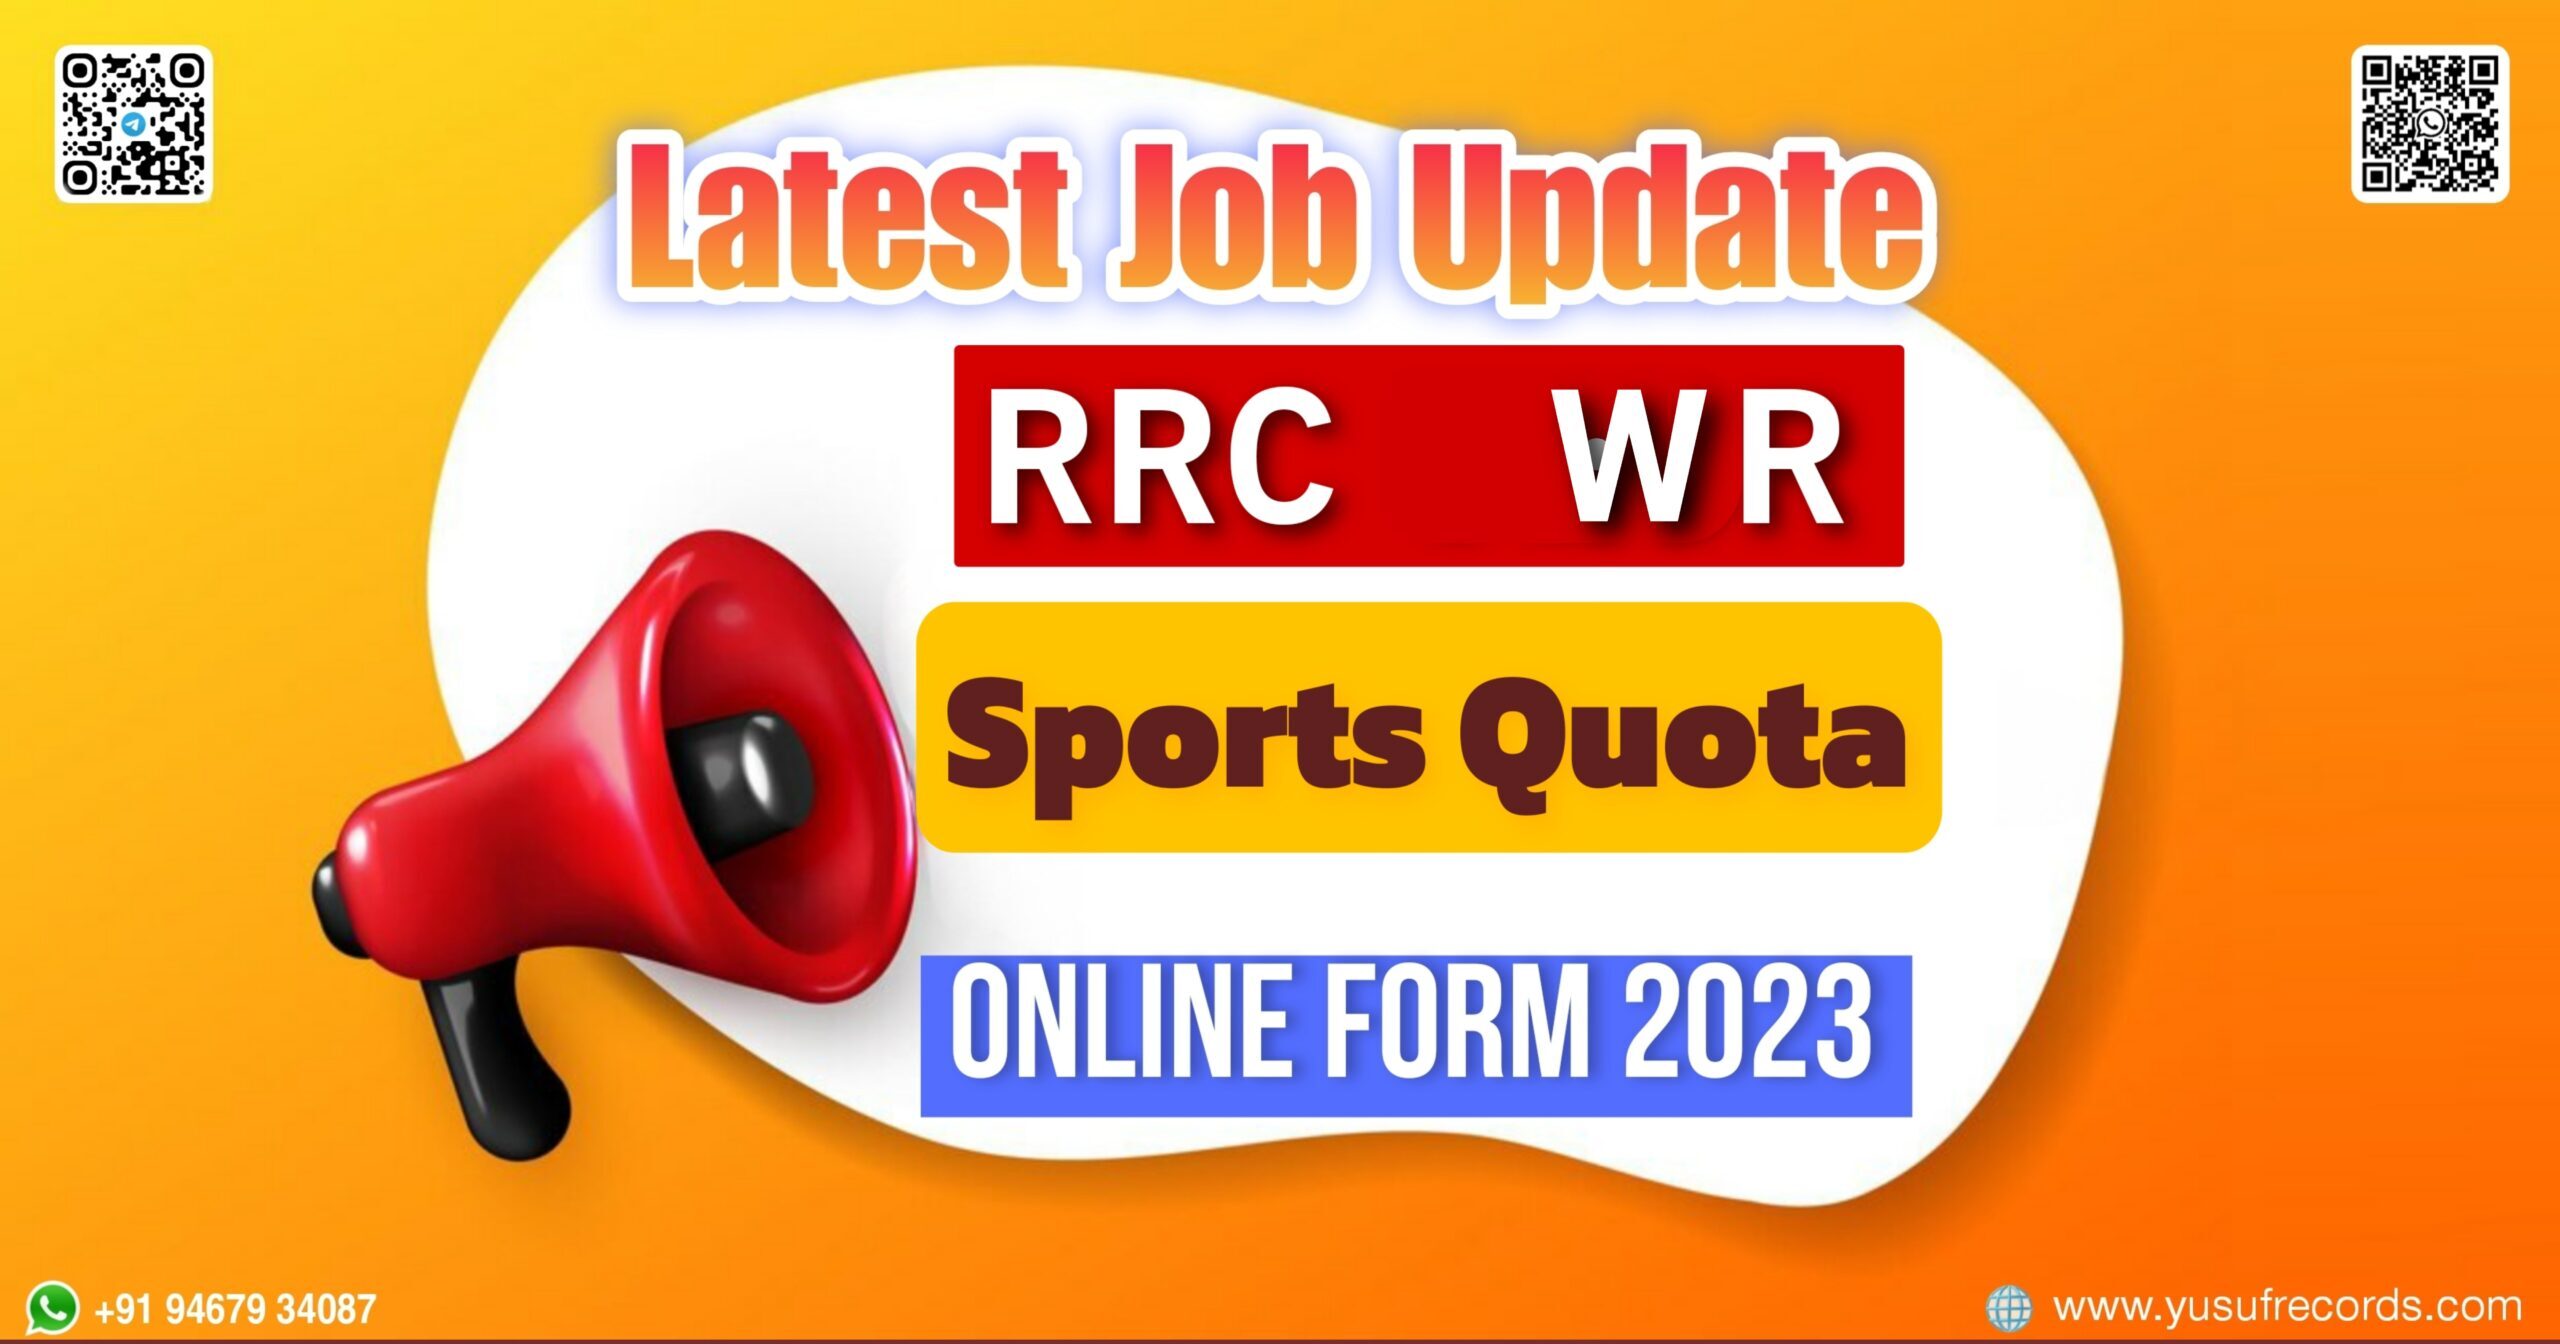 RRC WR Sports Quota Posts Online Form